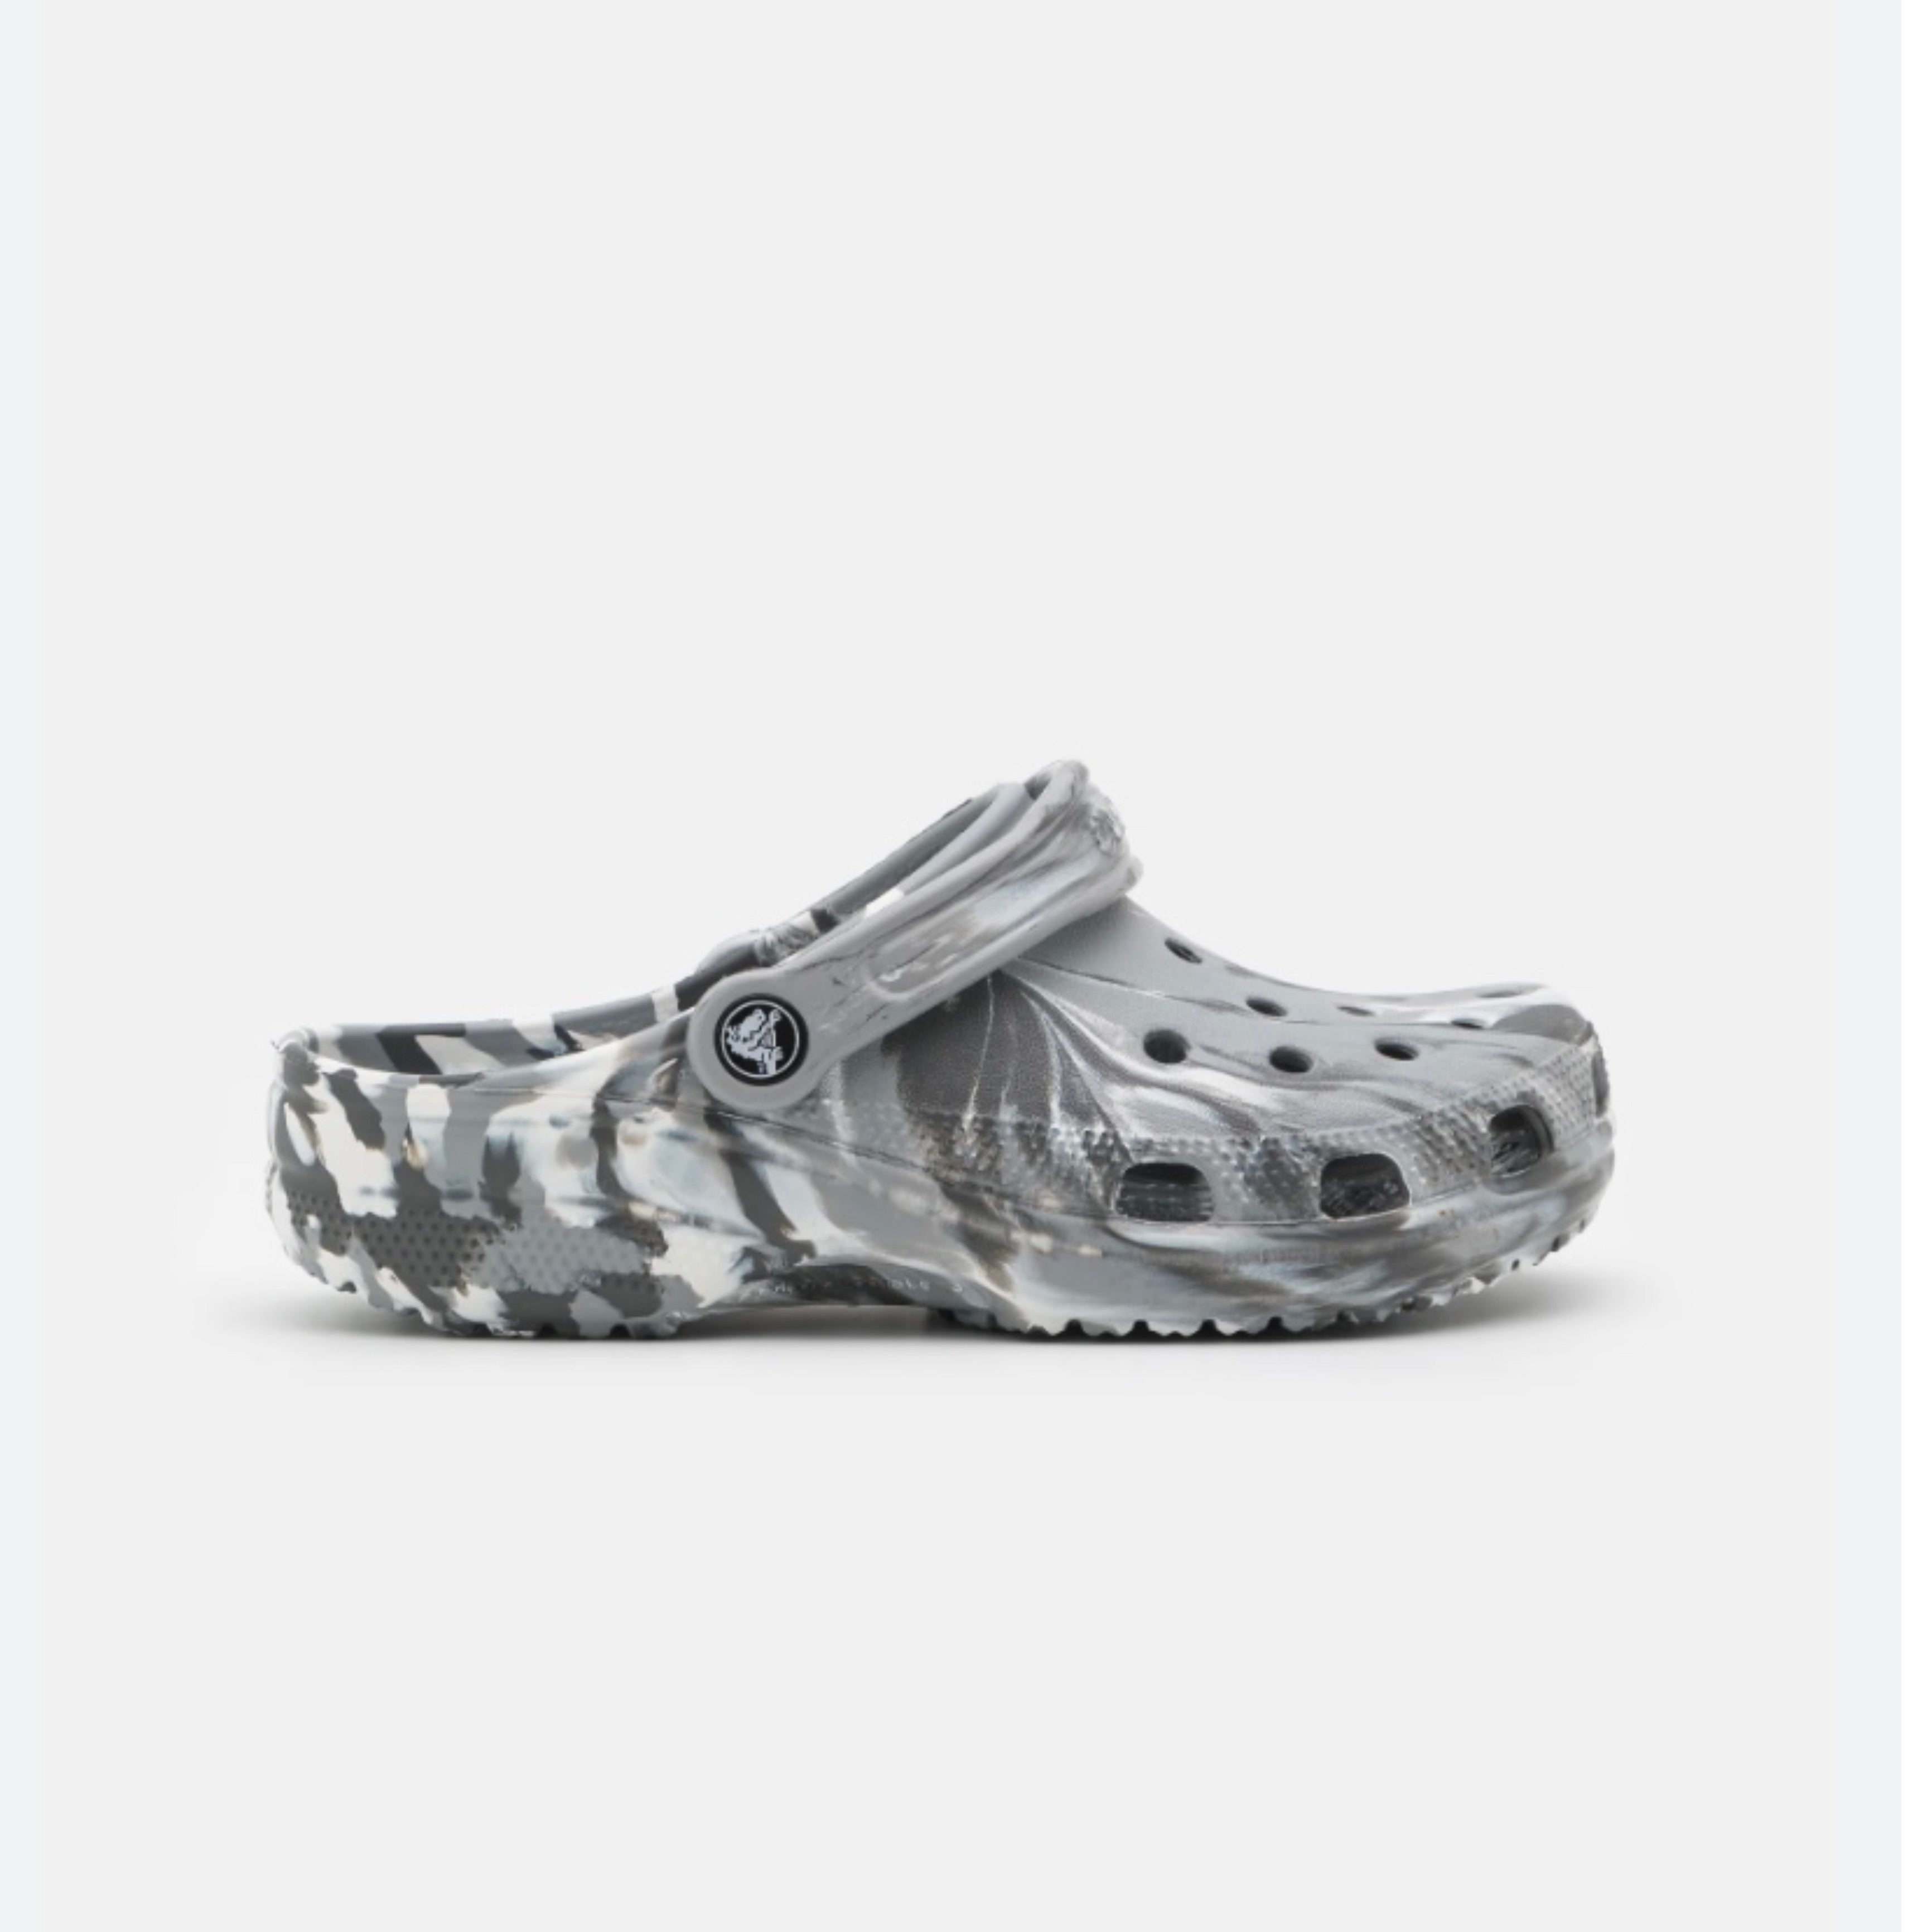 Marble grey crocs